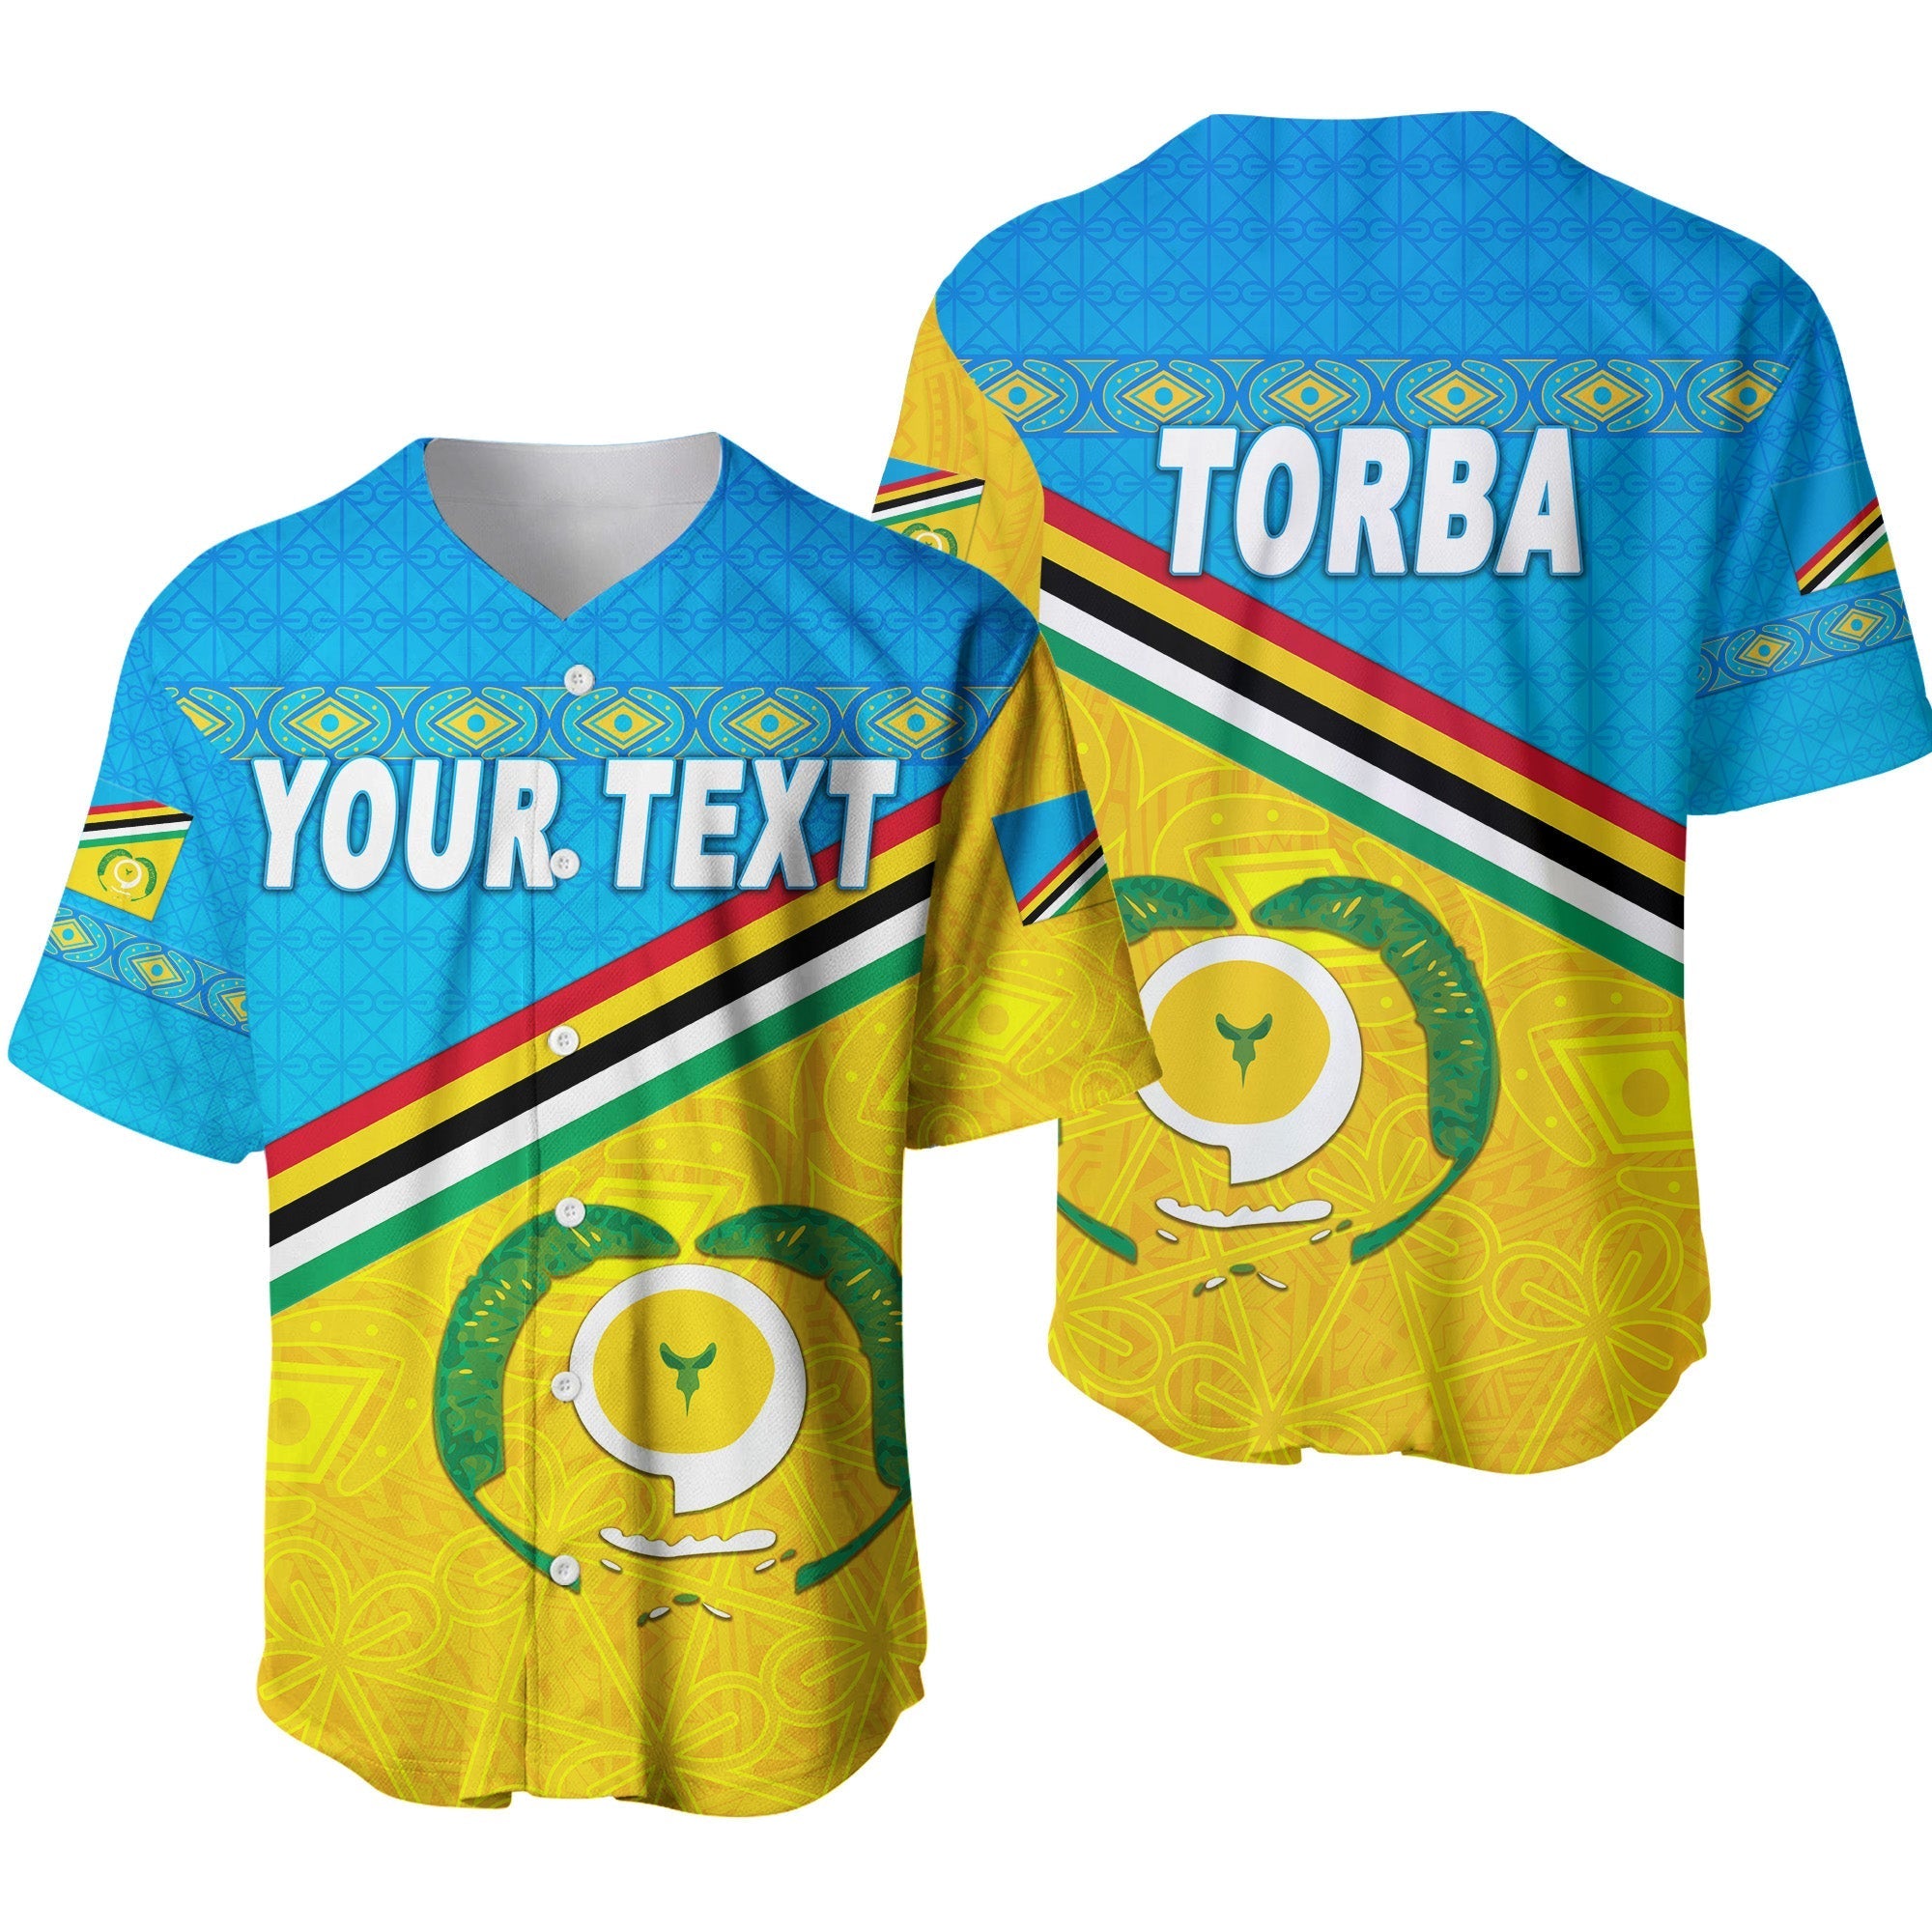 custom-personalised-torba-province-baseball-jersey-vanuatu-pattern-unique-style